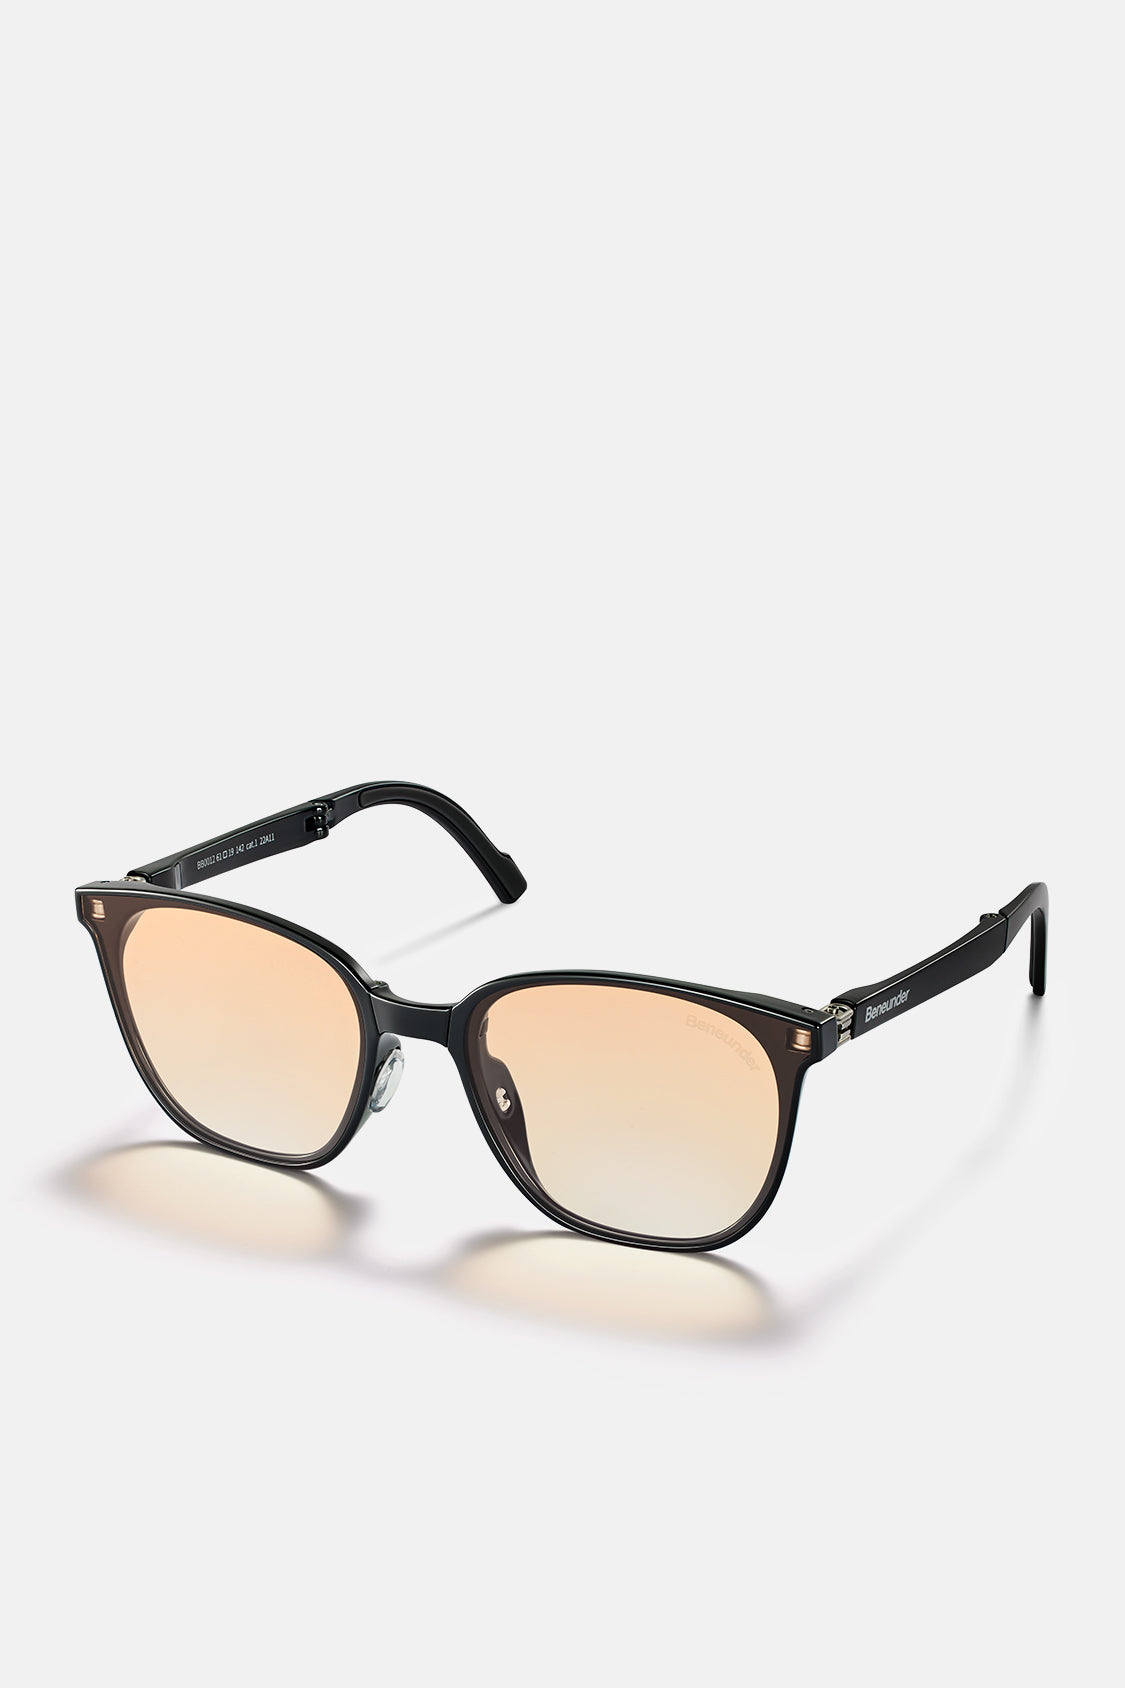 BENEUNDER Sunglasses, Polarized Lenses, 100% UV Algeria